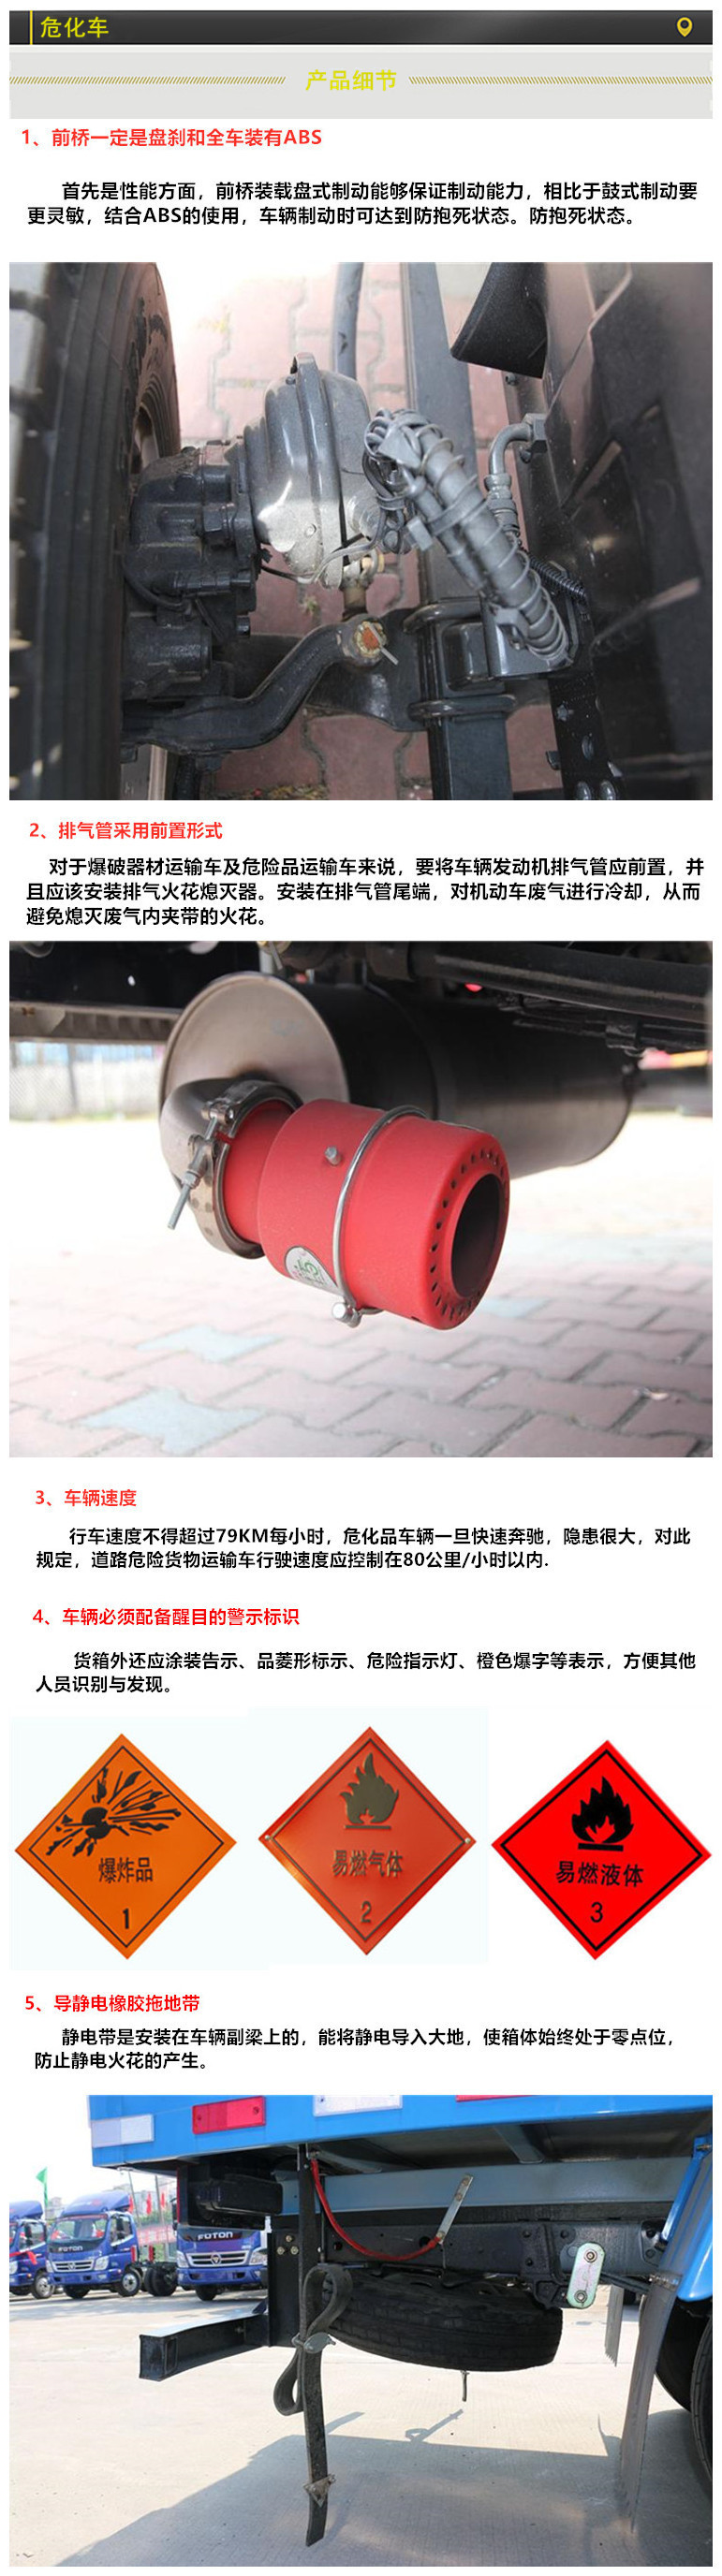 Guoliu Jiangling Blue Dangerous Goods Transport Vehicle Flammable Gas Steel Cylinder Industrial Gas Cylinder Cryogenic storage dewar Transport